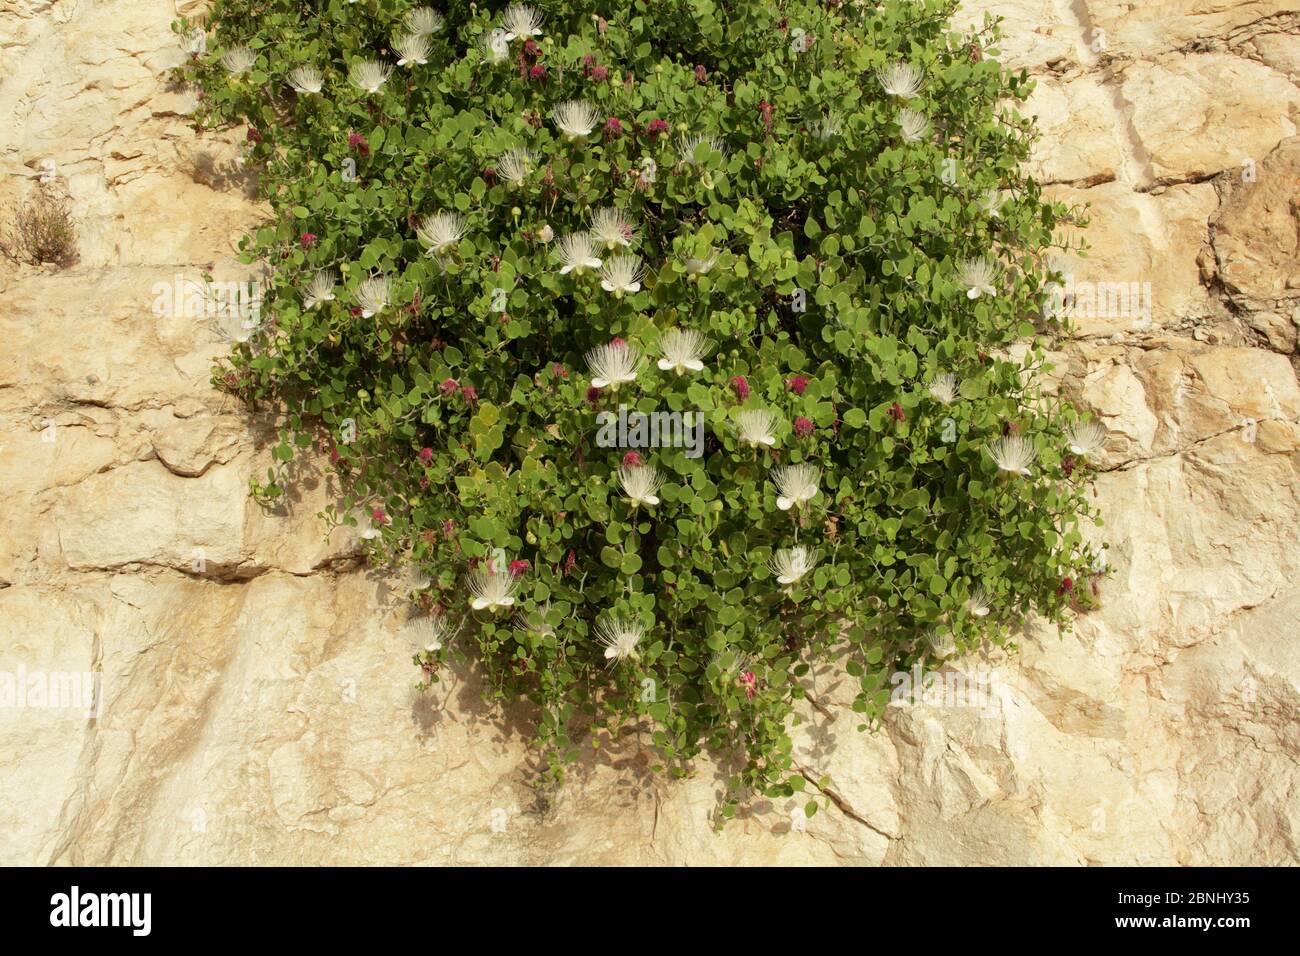 Cartilage caper (Capparis cartilaginea) in bloom, Oman, May Stock Photo